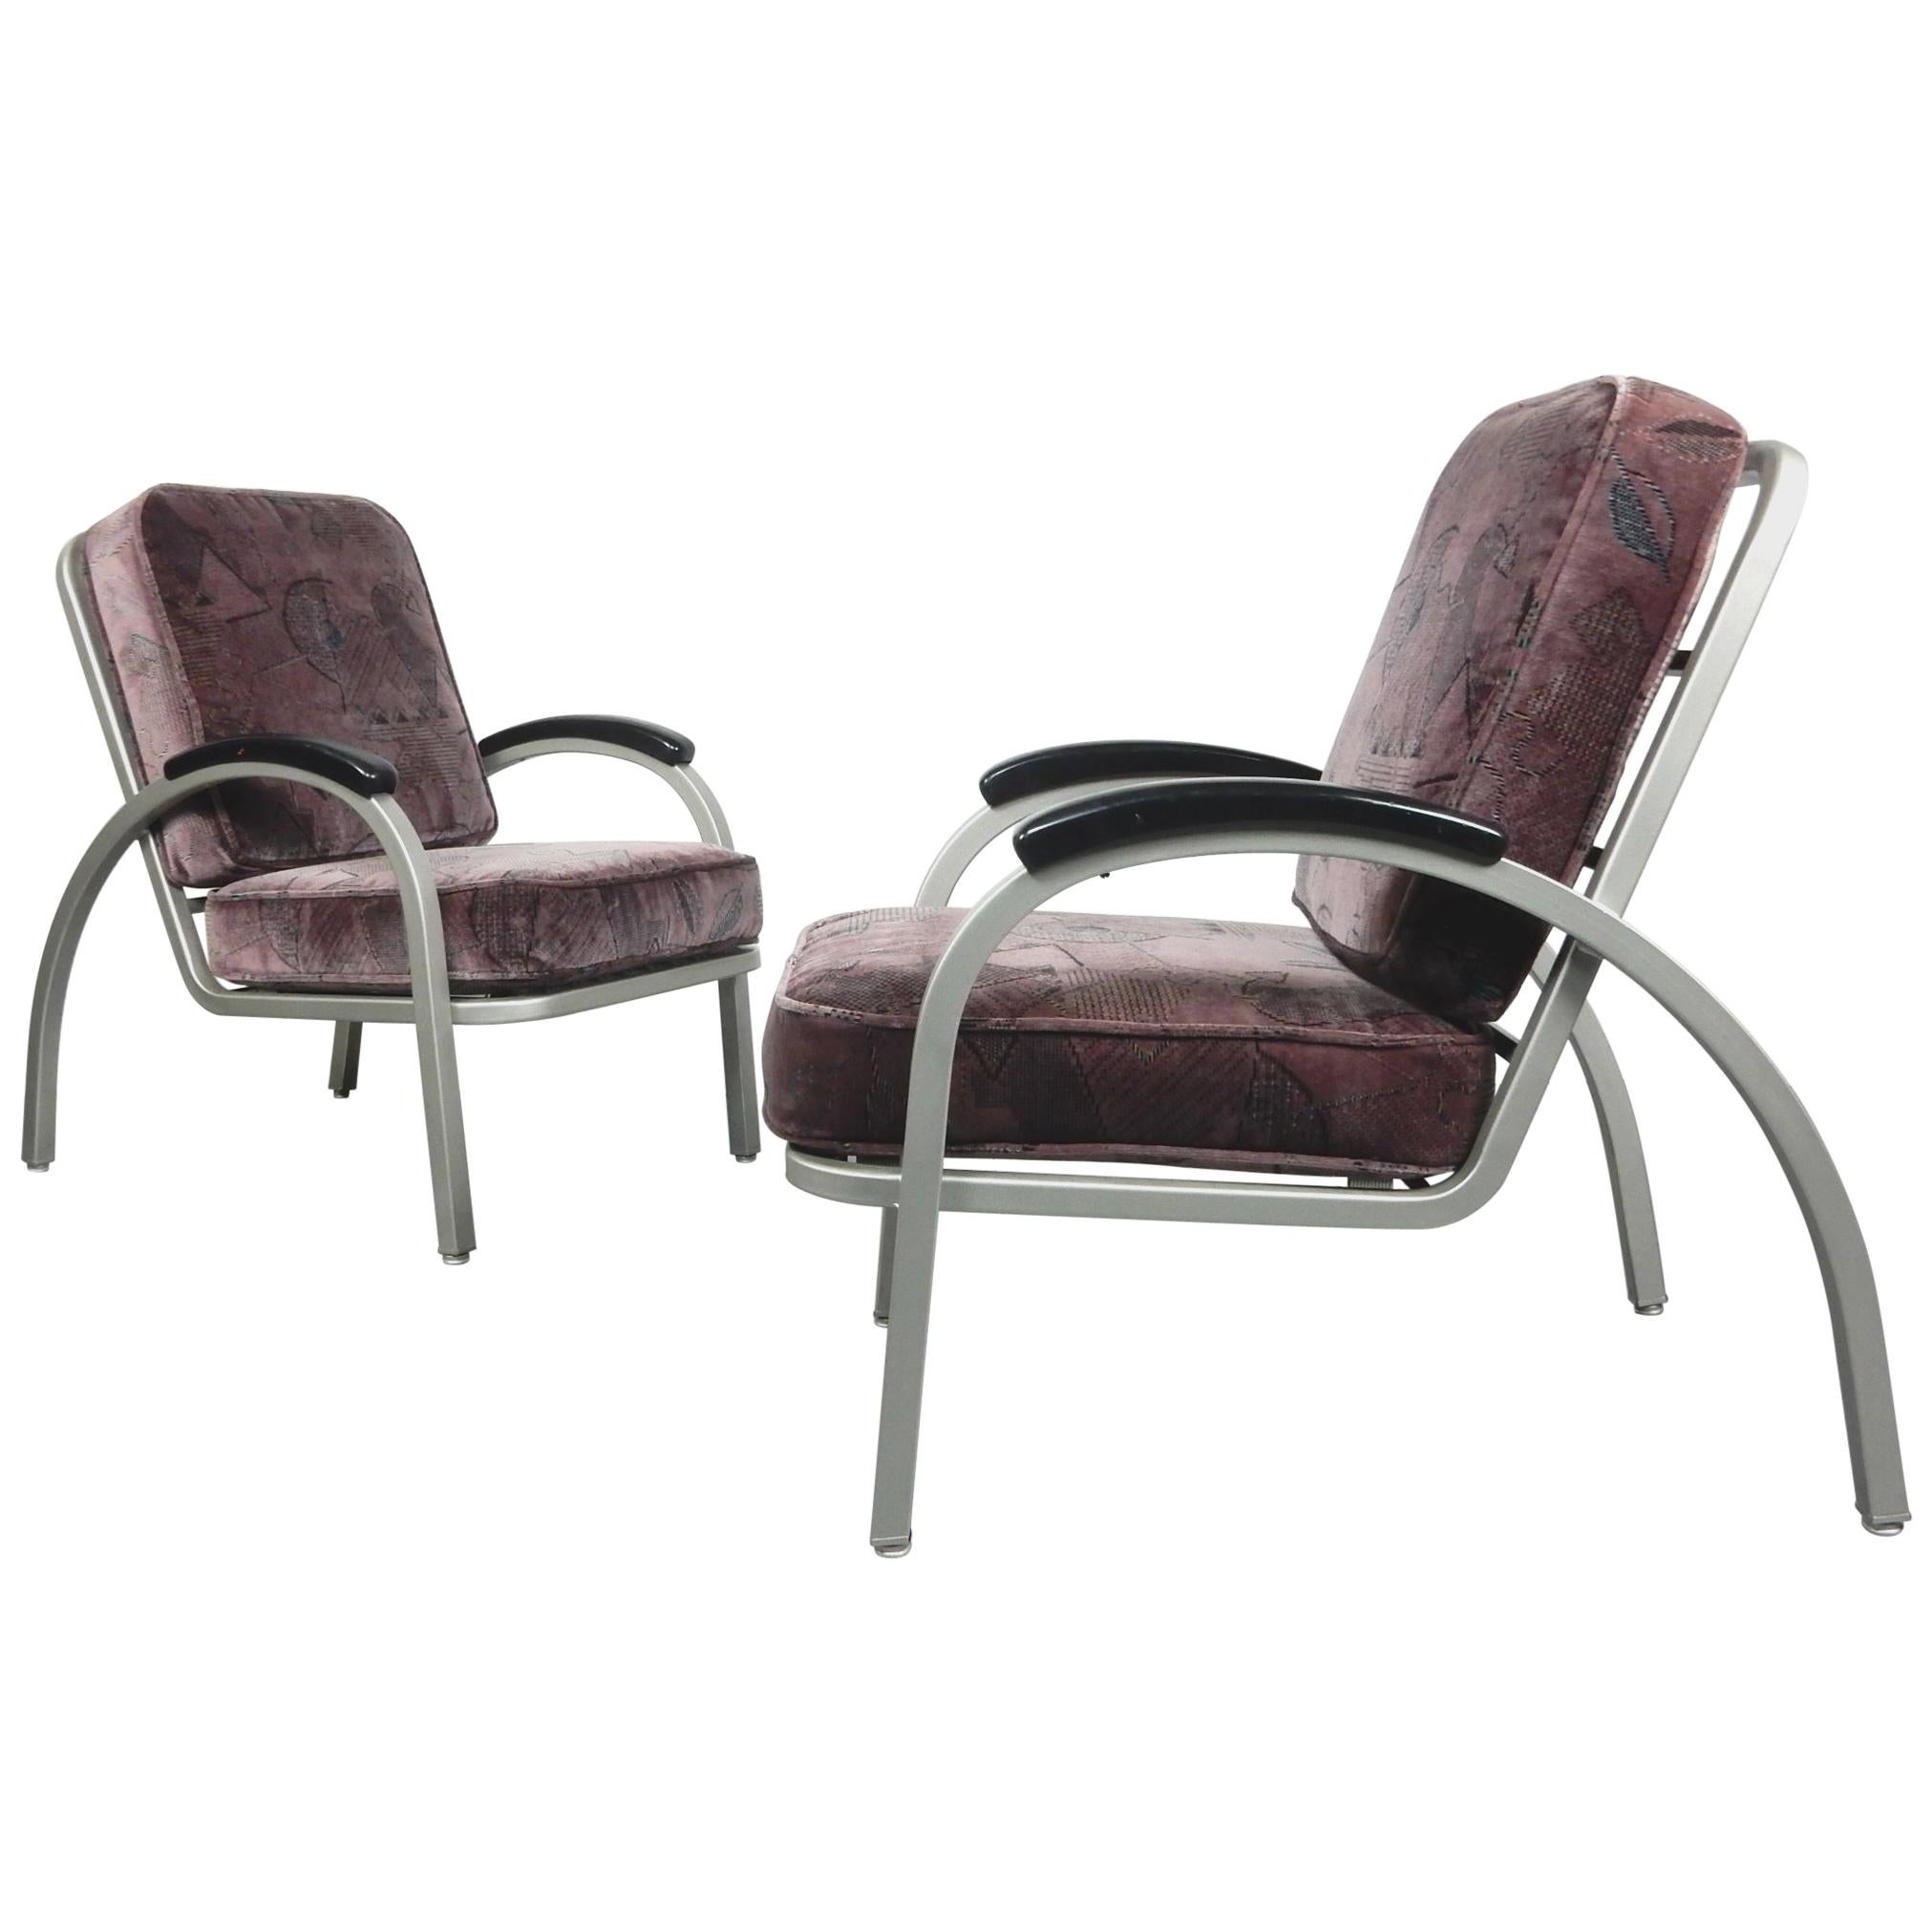 Art Deco Bauhaus Lounge Chairs Designed by Norman Bel Geddes